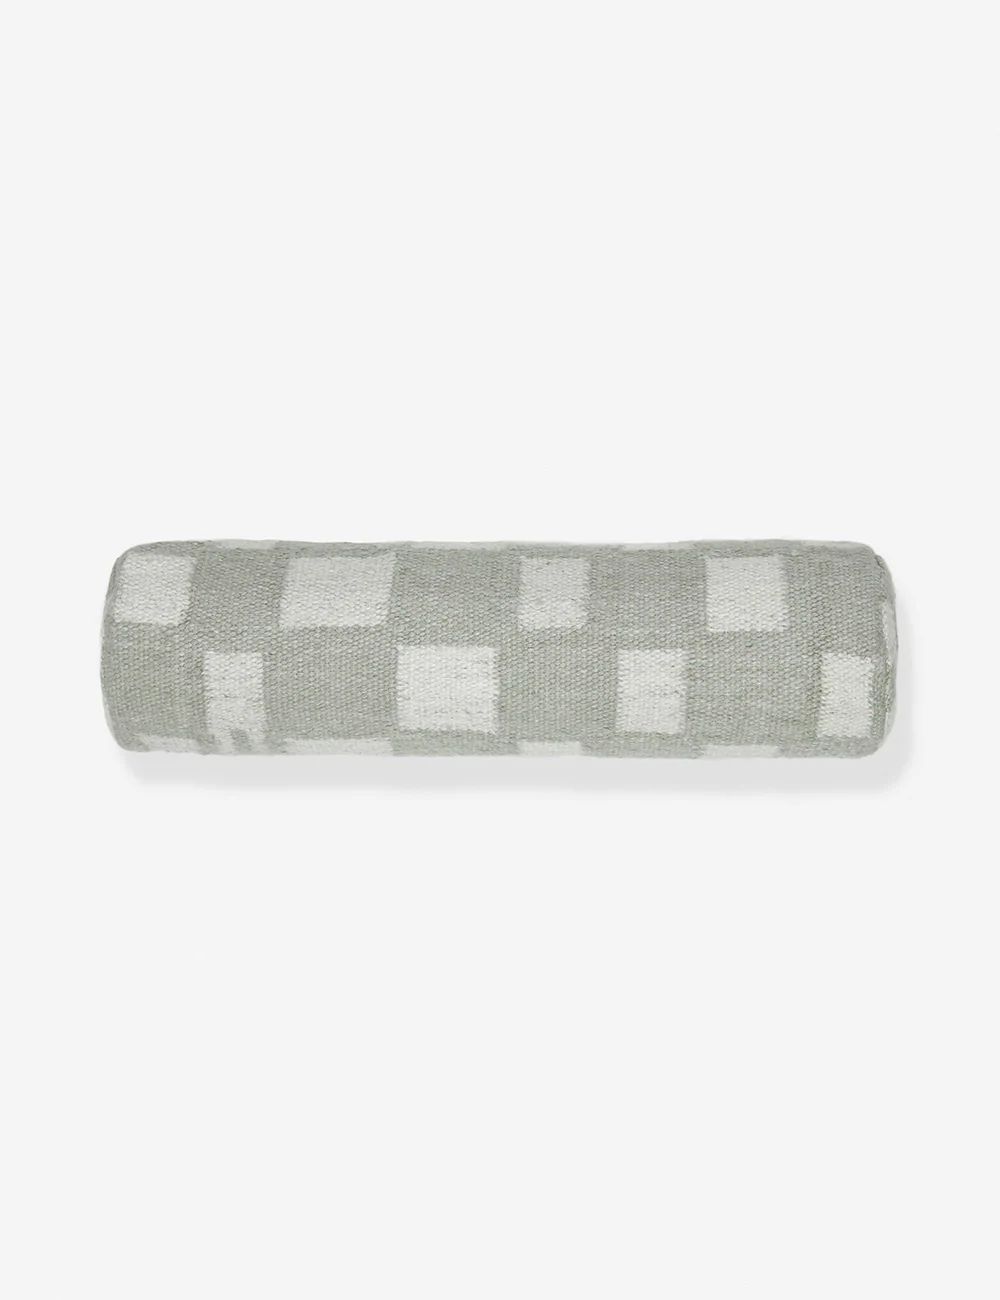 Irregular Checkerboard Bolster Pillow | Lulu and Georgia 